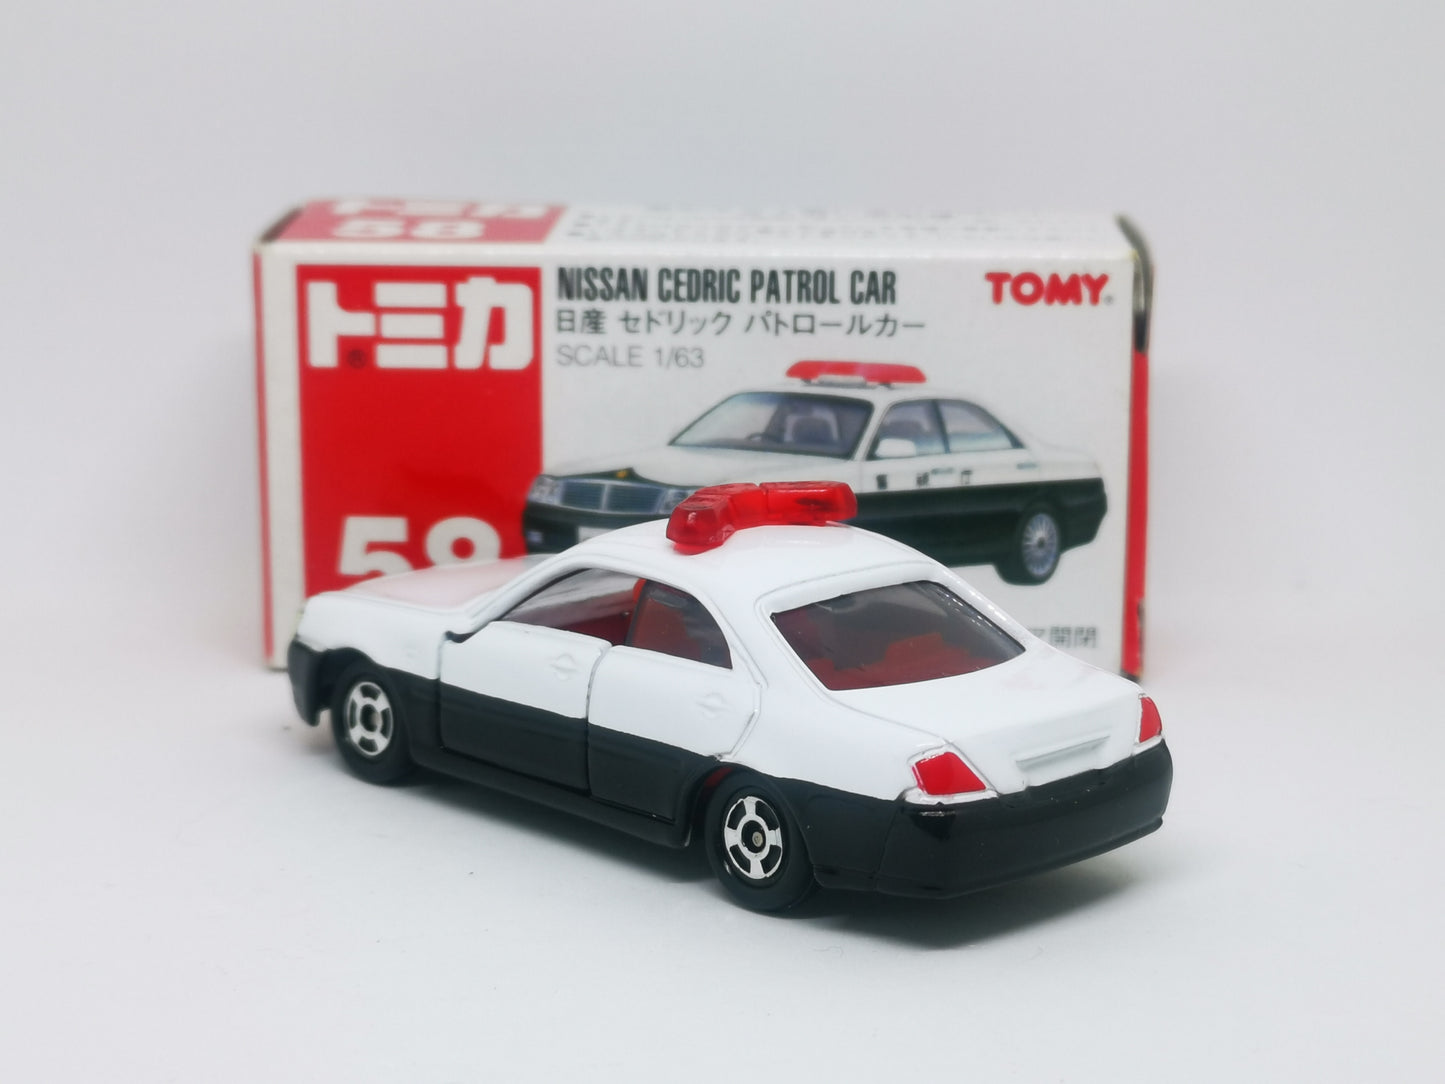 Tomica #58 Nissan Cedric Japan Patrol Car